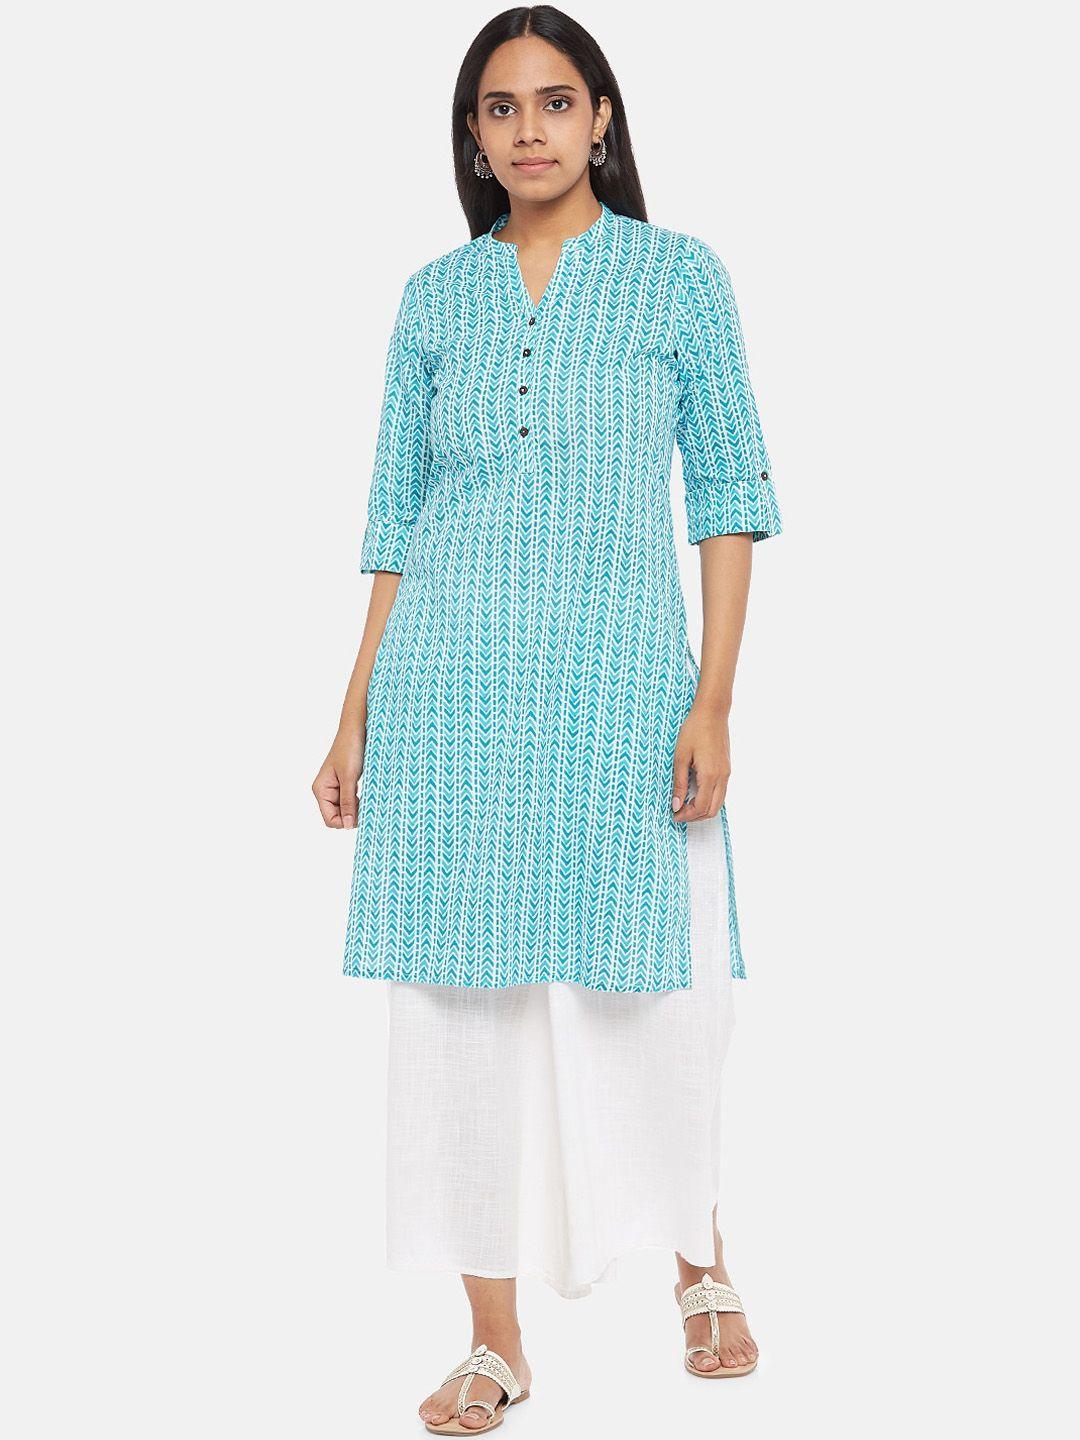 rangmanch by pantaloons women turquoise blue geometric striped thread work kurta